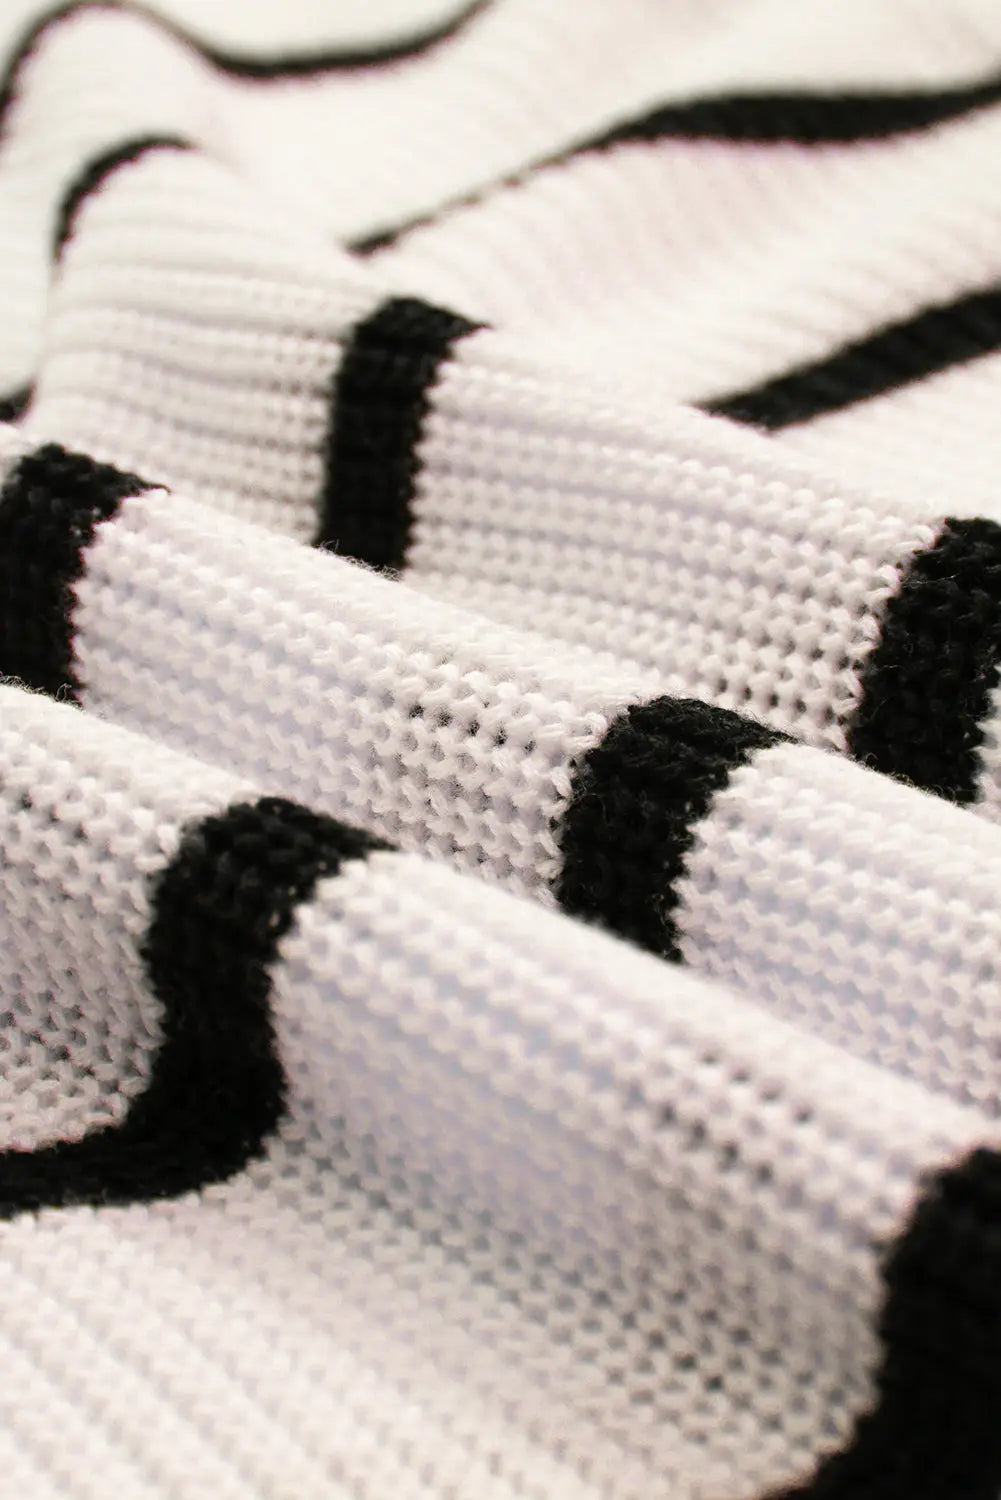 White stripe striped pattern batwing sleeve sweater - tops